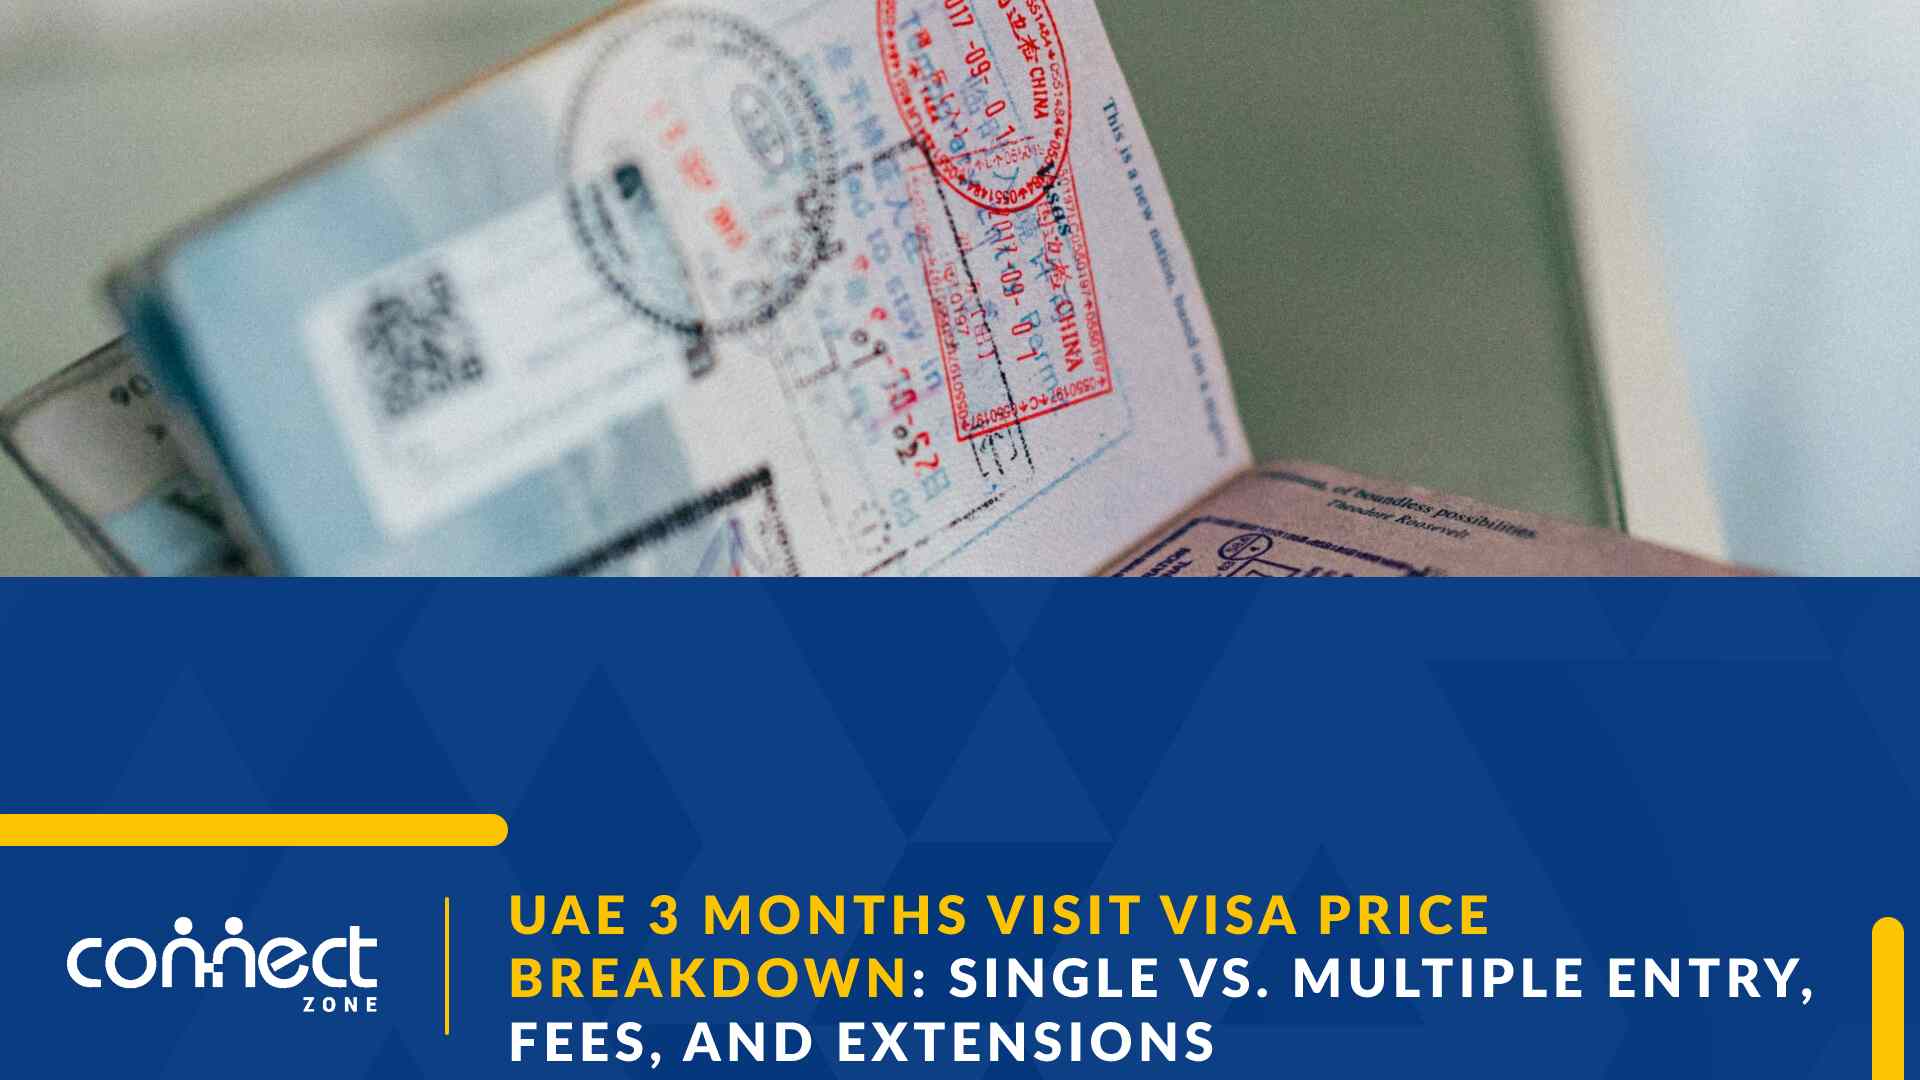 uae 3 months visit visa price